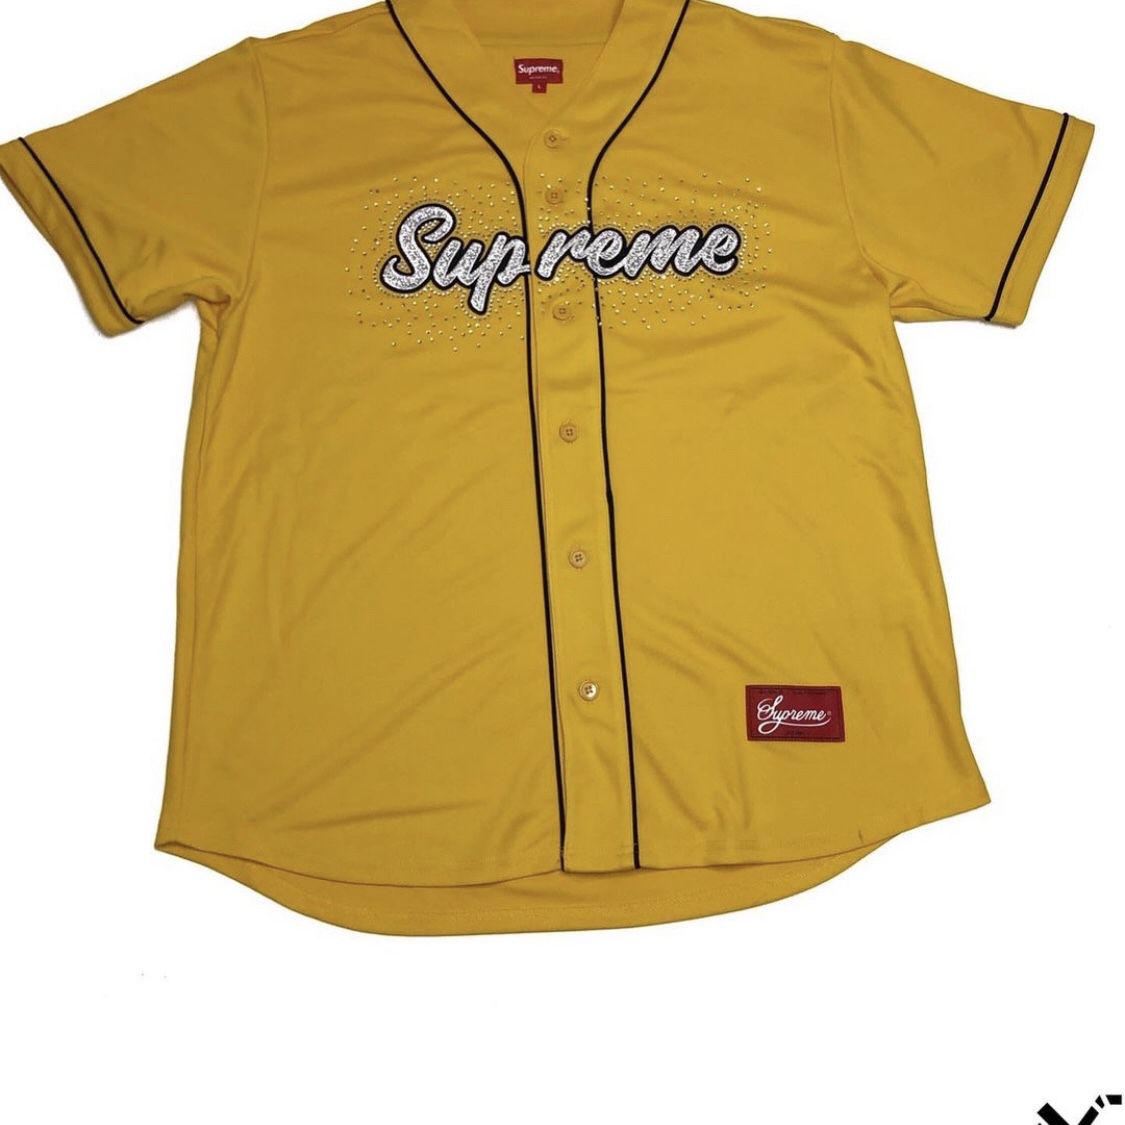 Supreme Rhinestone Baseball Jersey